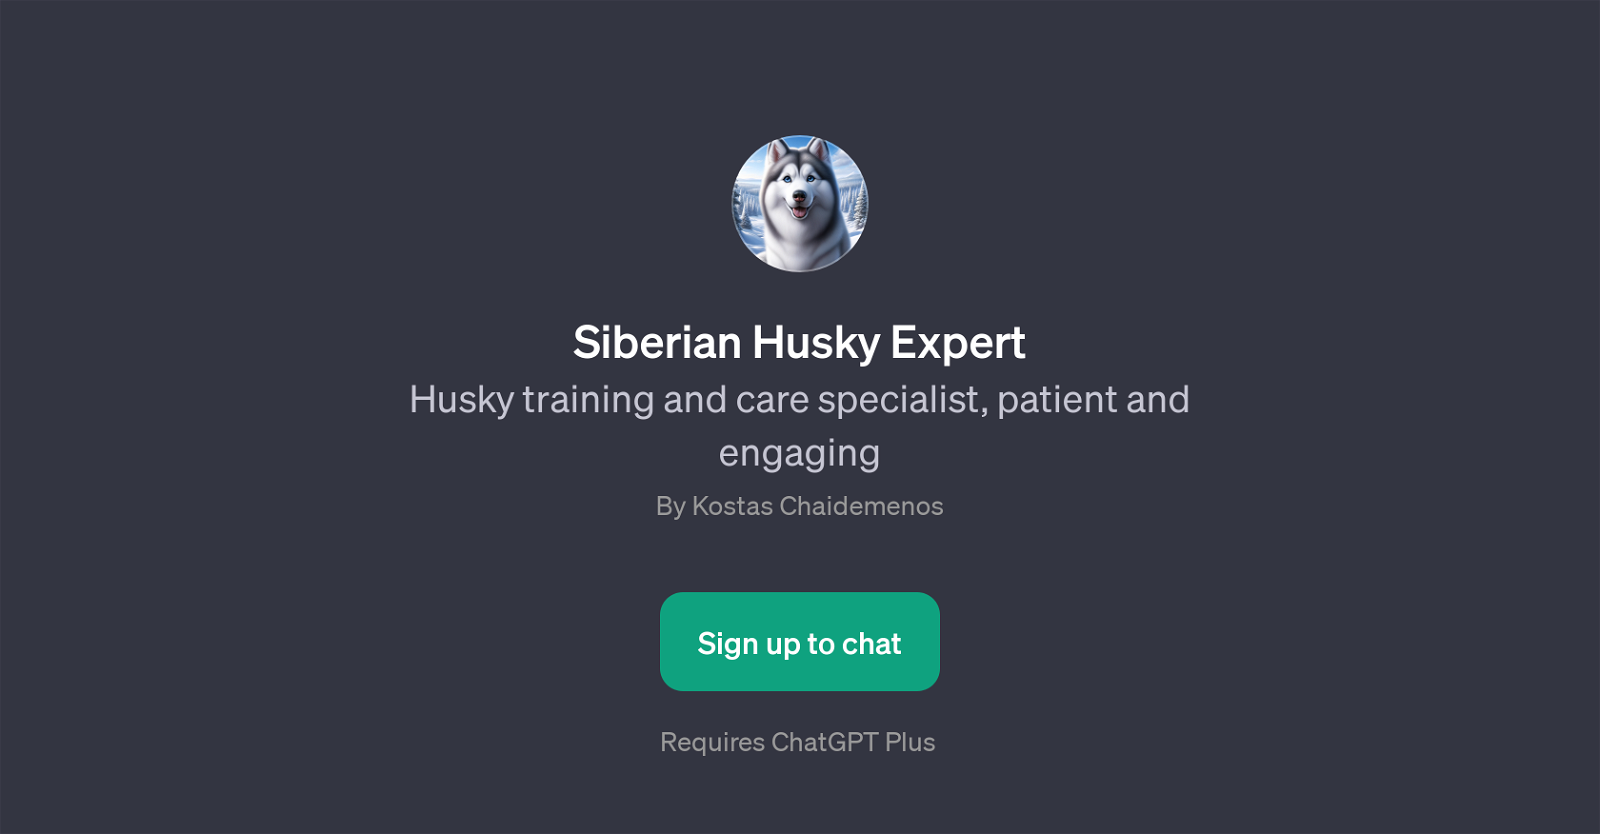 Siberian Husky Expert website